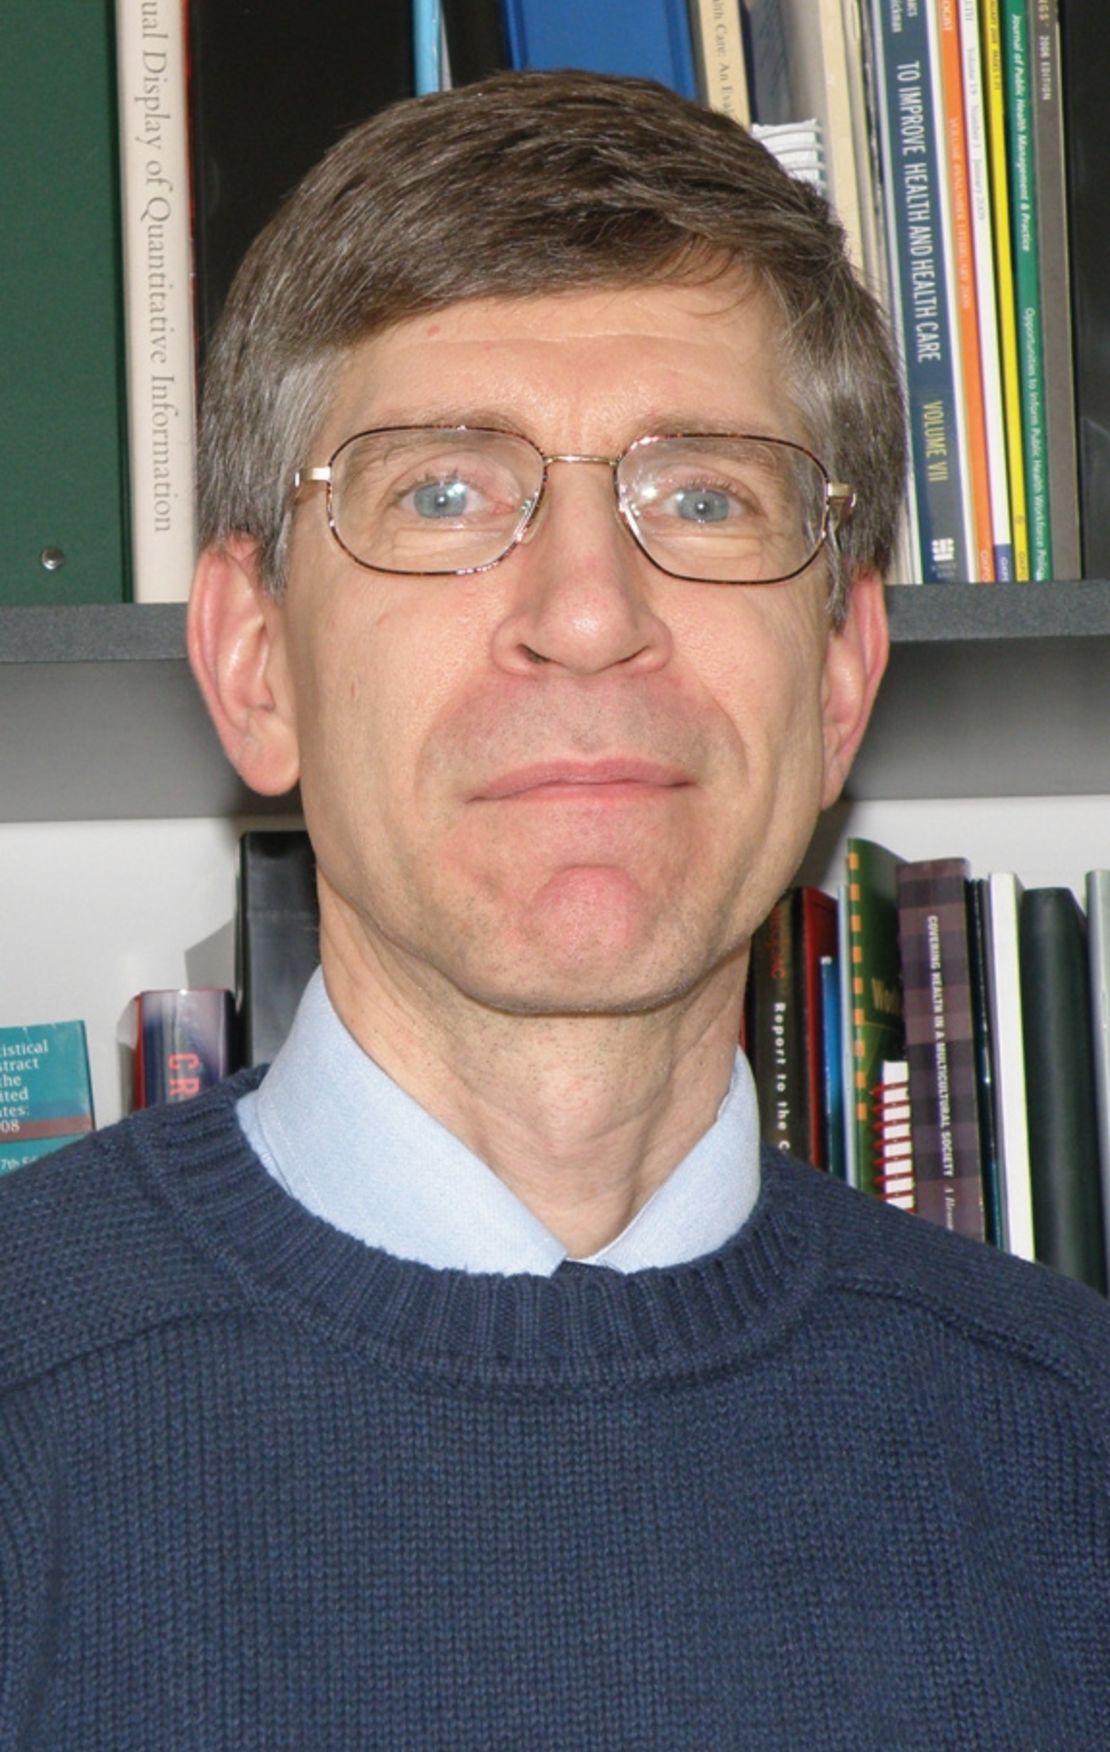 Dr. Michael Carome